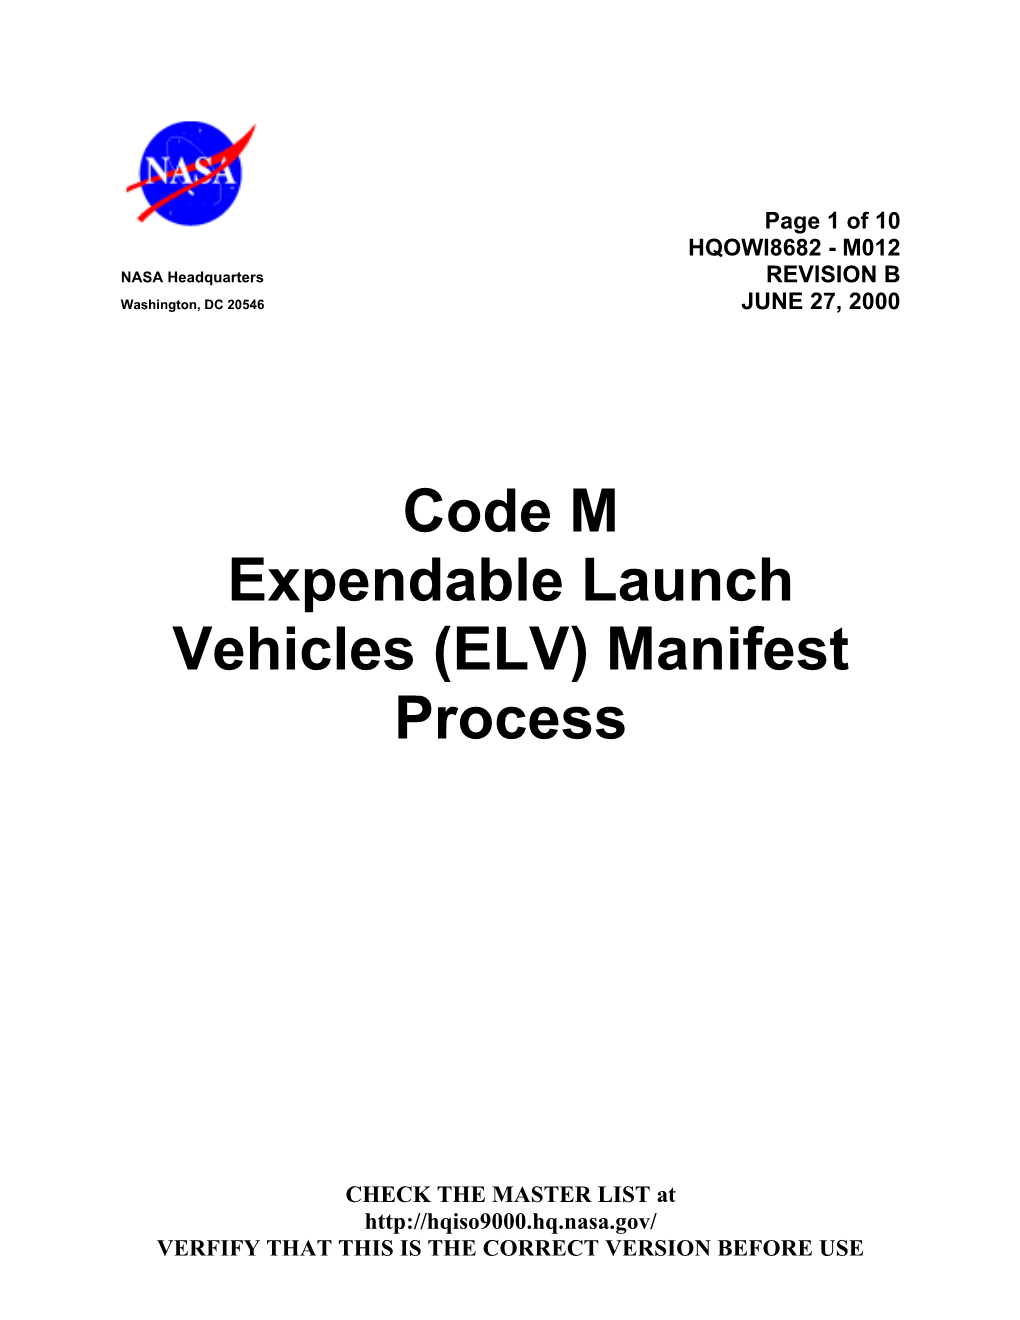 Expendable Launch Vehicles (ELV) Manifest Process